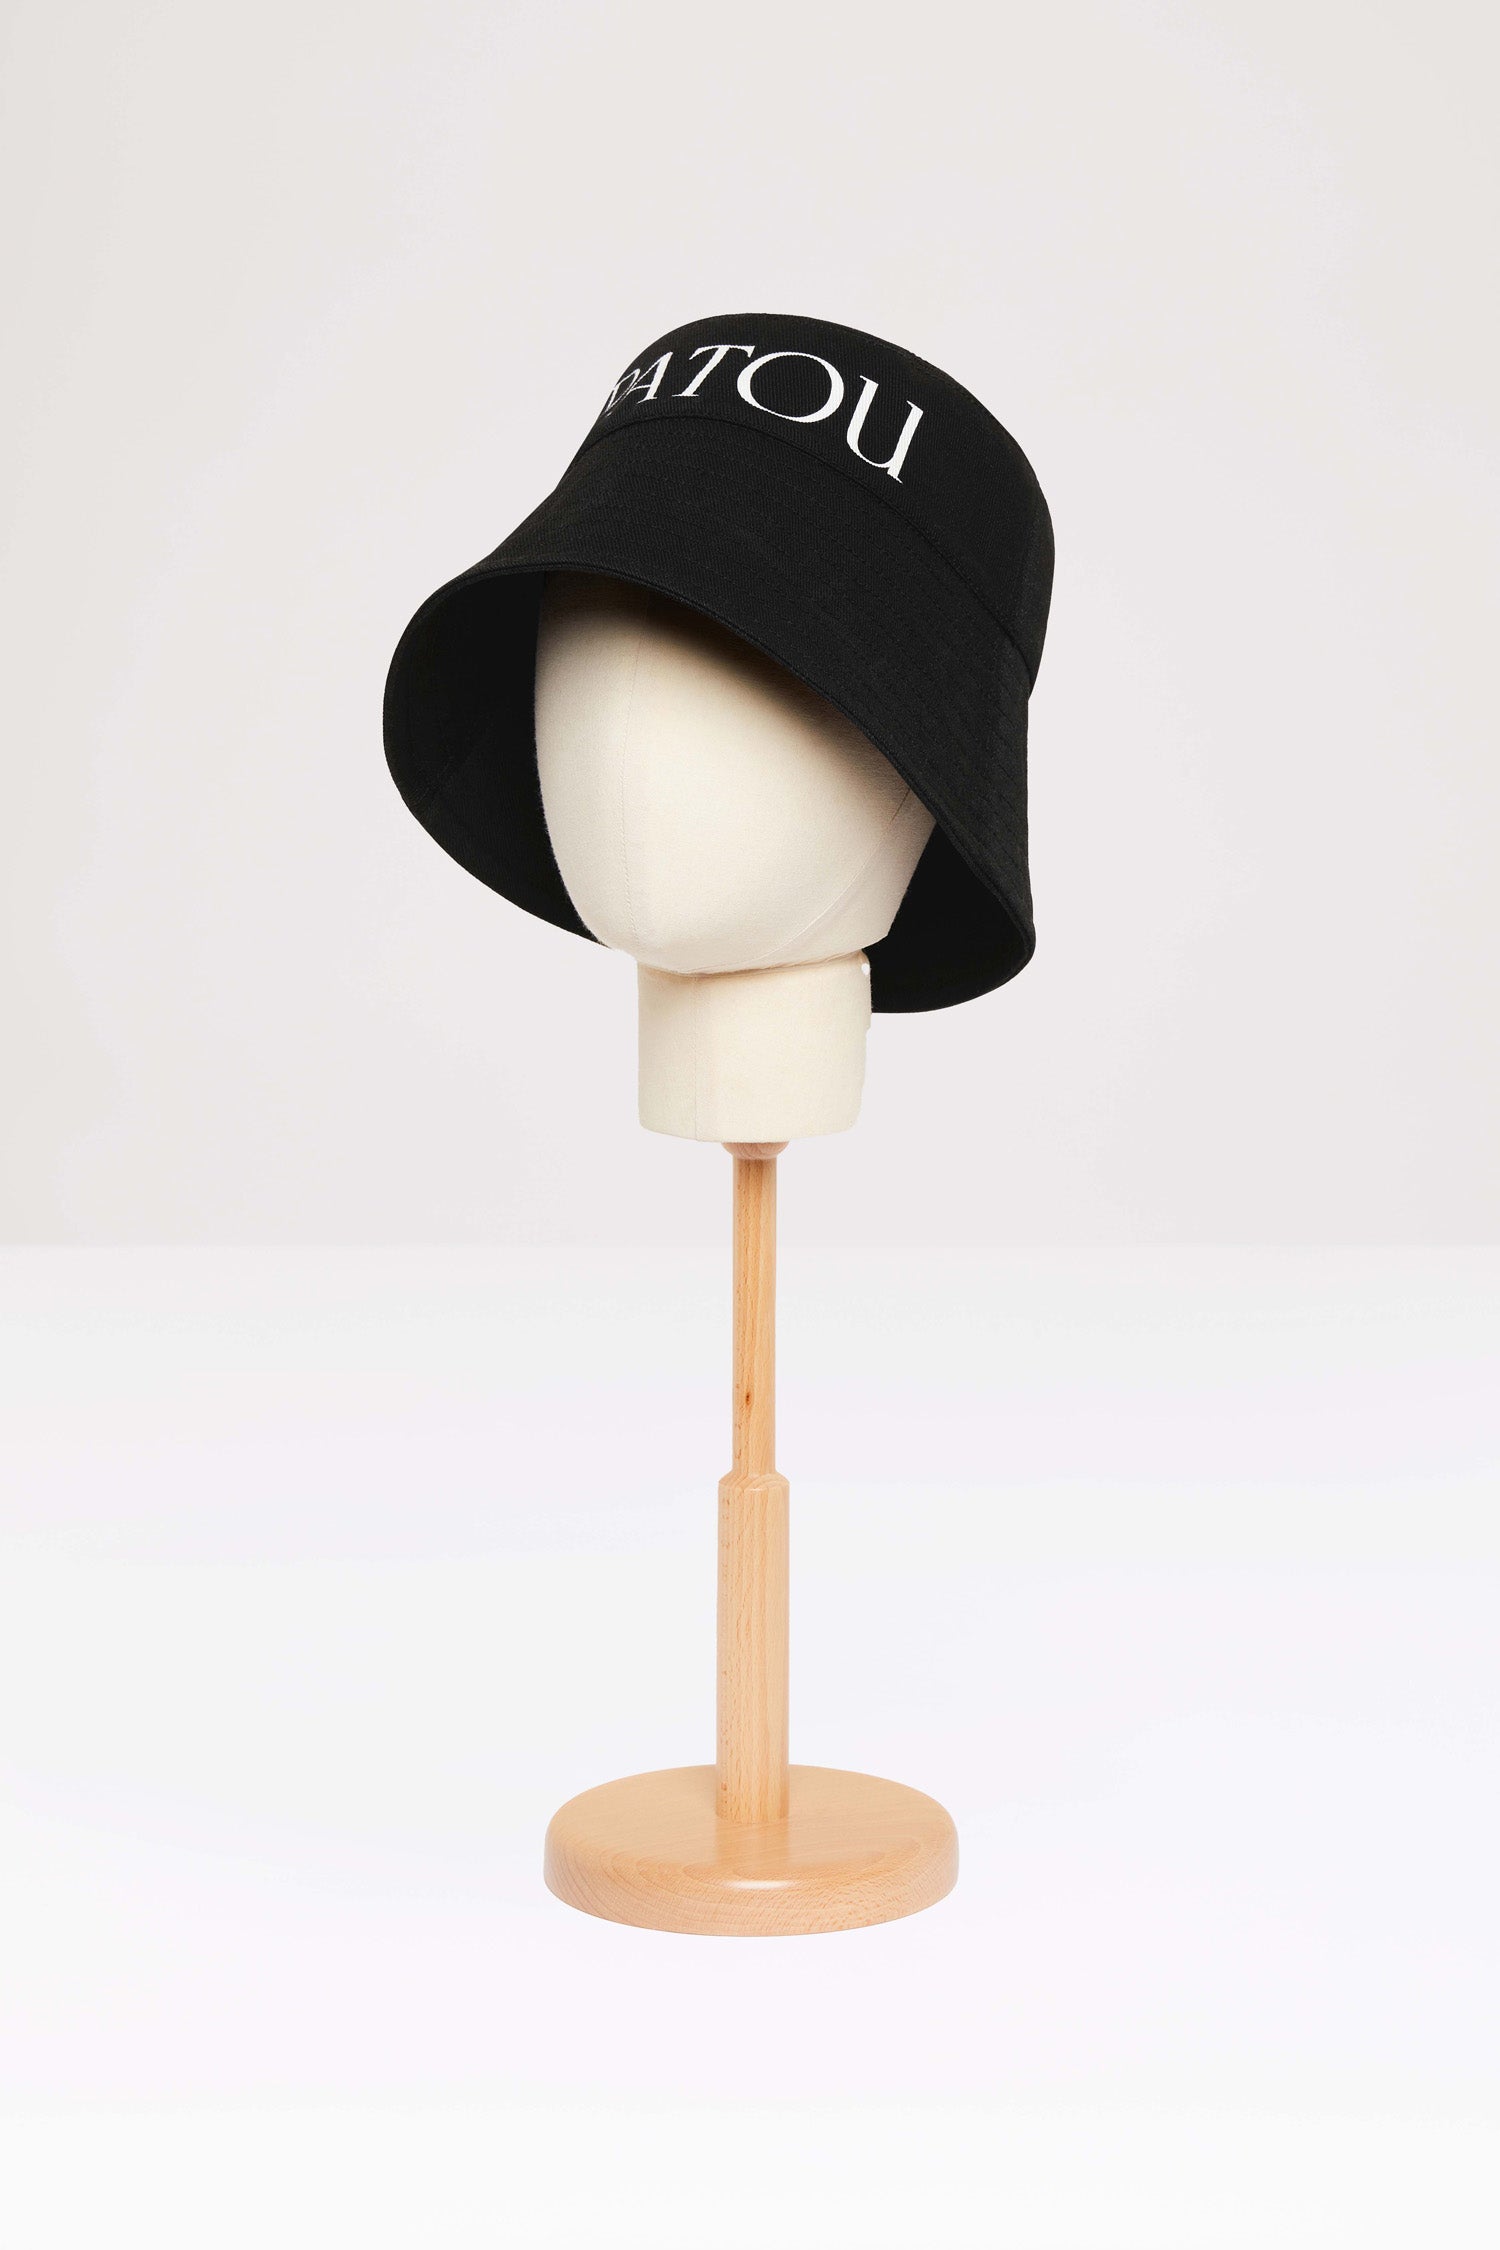 M L XL XXL Reversible Wide Brim Bucket Hat